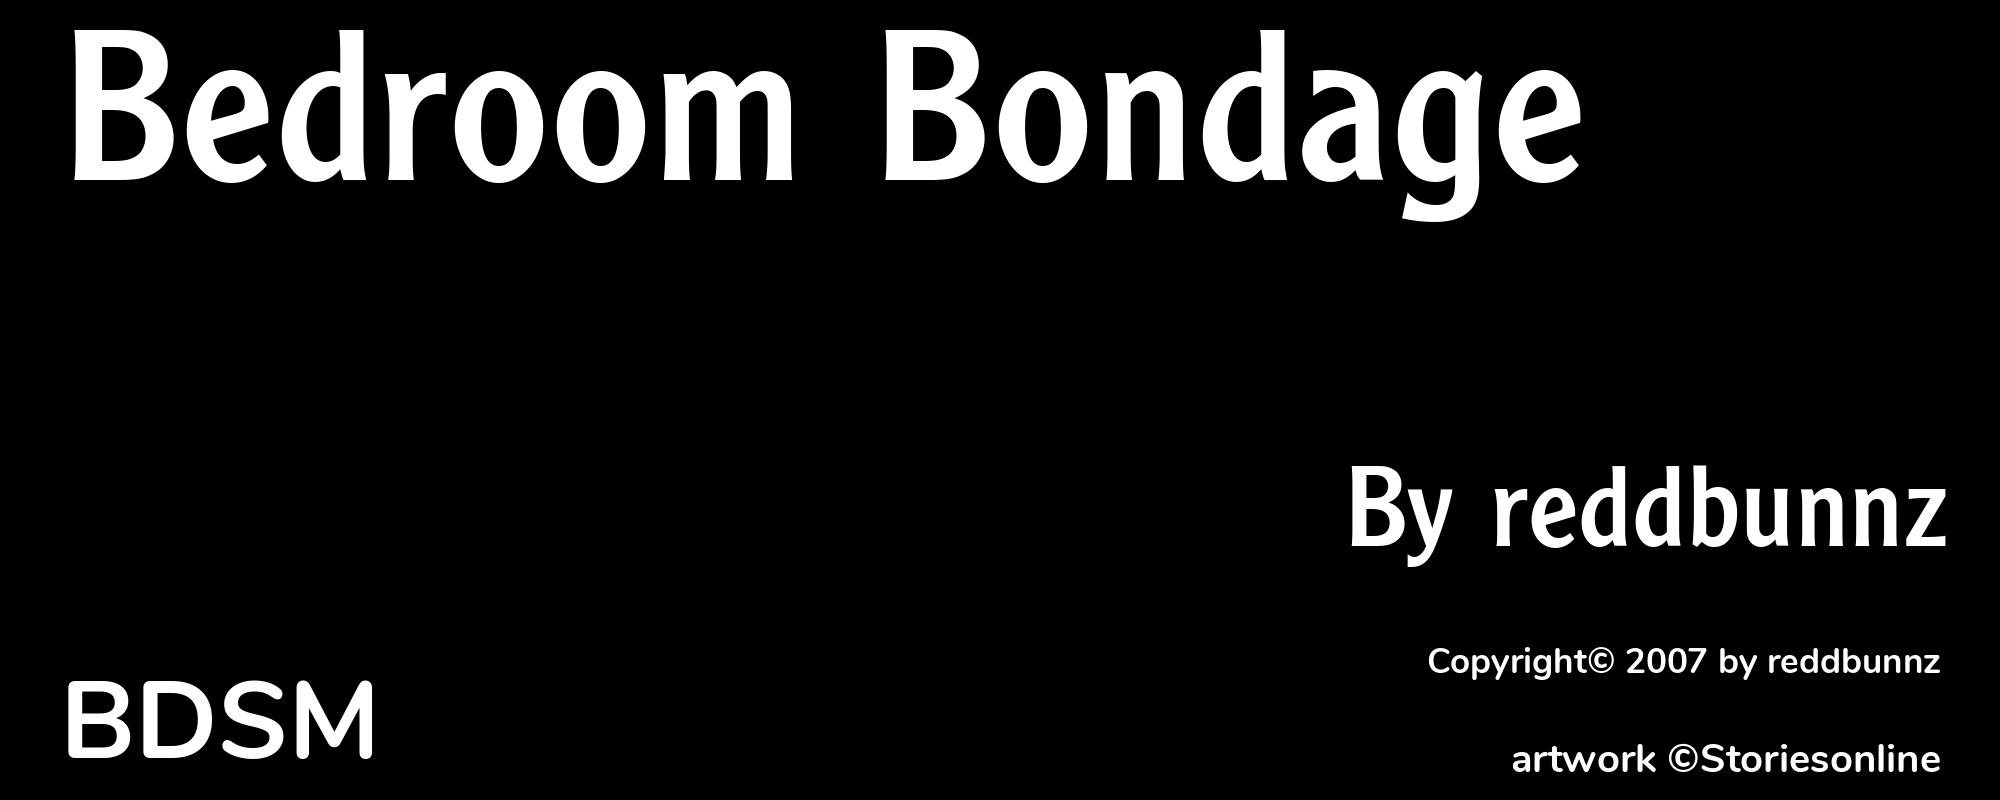 Bedroom Bondage - Cover